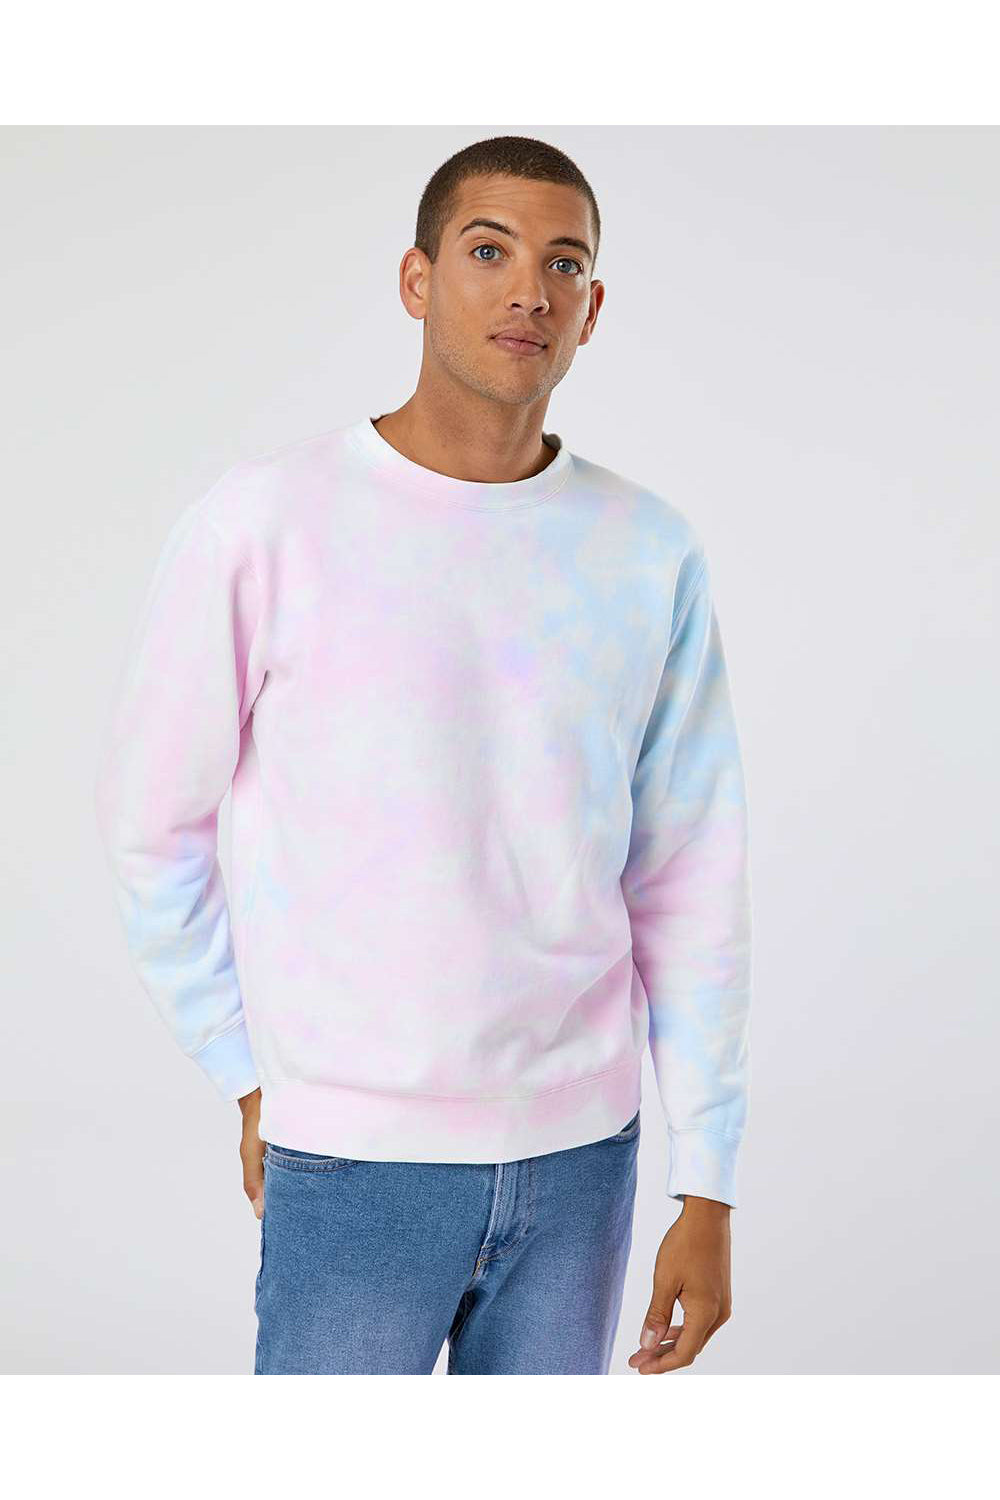 Independent Trading Co. PRM3500TD Mens Tie-Dye Crewneck Sweatshirt Cotton Candy Model Front